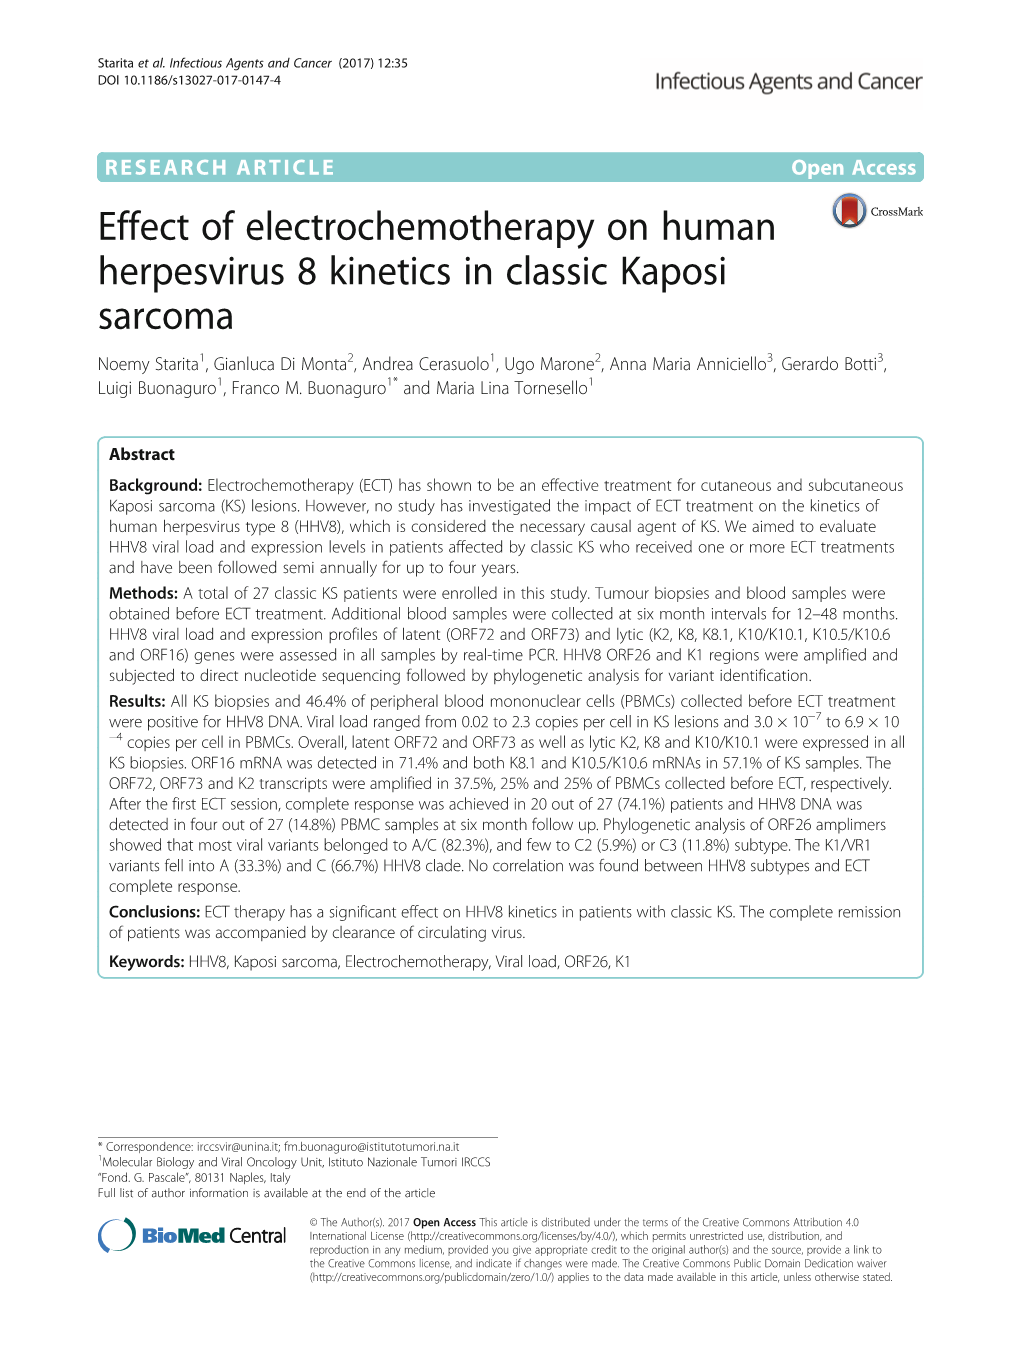 Effect of Electrochemotherapy on Human Herpesvirus 8 Kinetics in Classic Kaposi Sarcoma